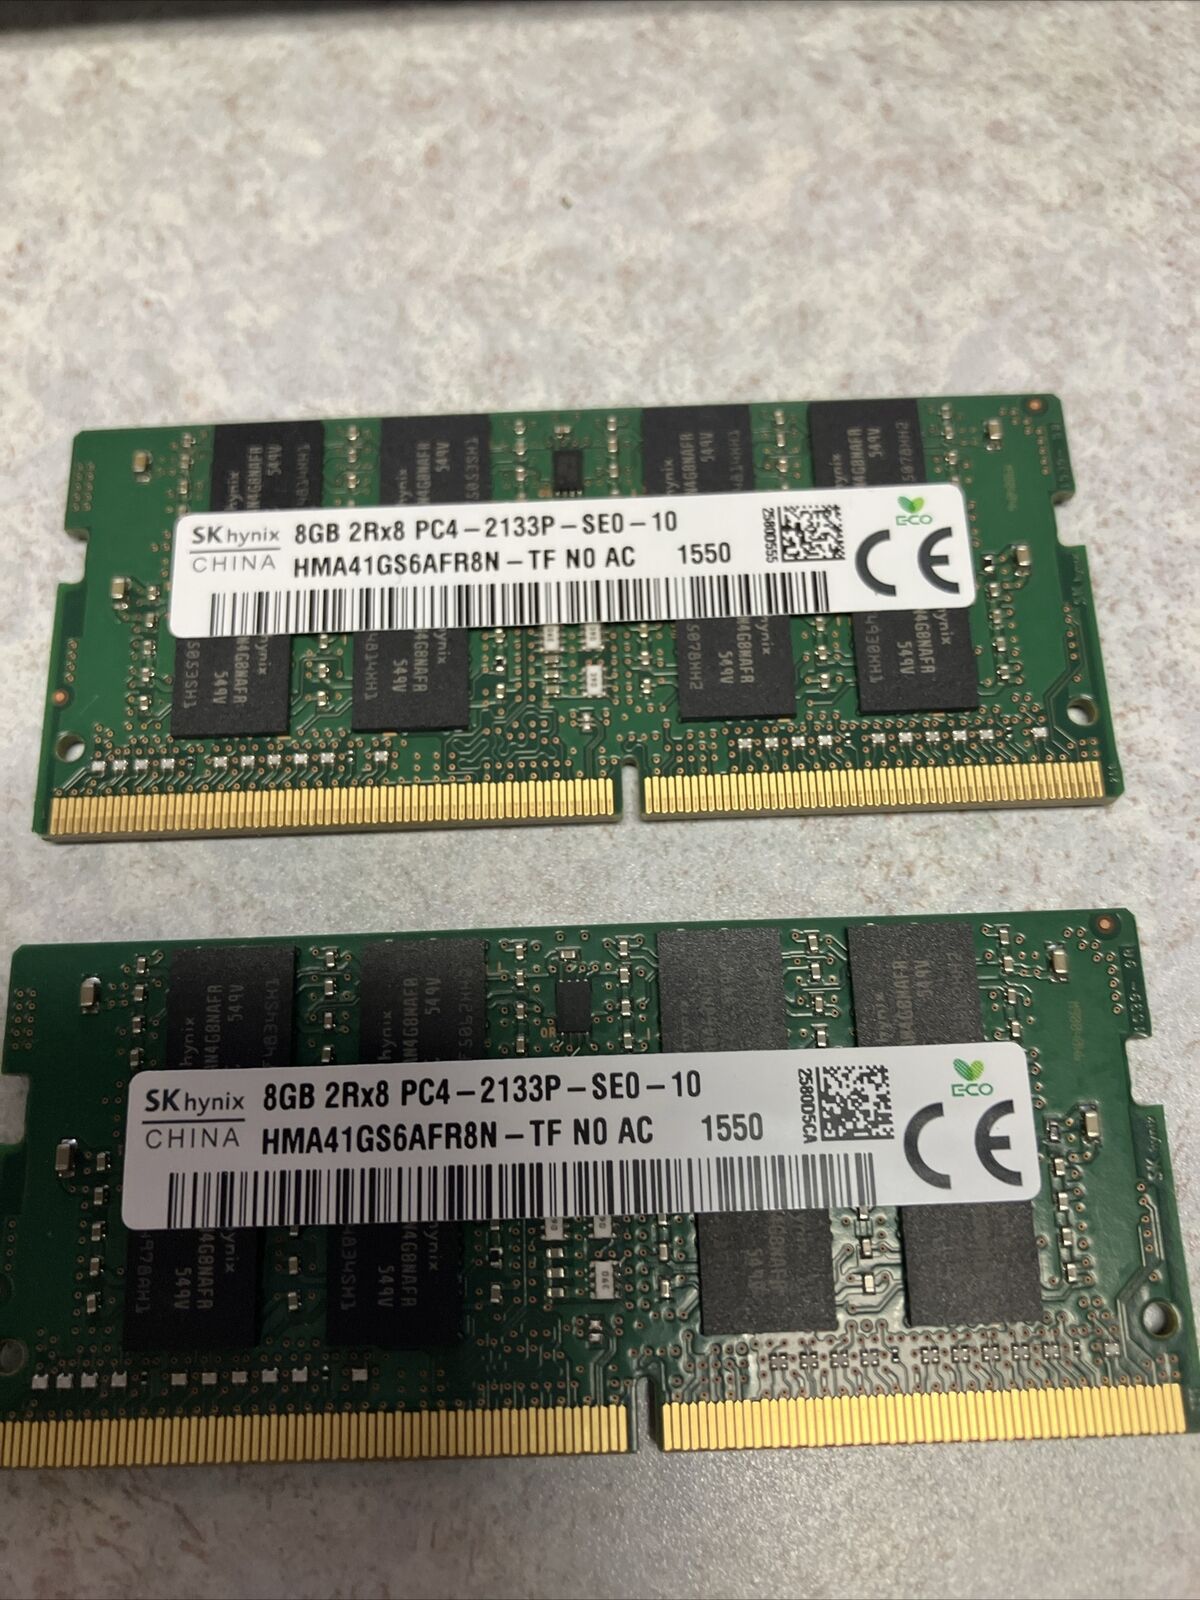 SK Hynix  16GB (2x8GB) 2Rx8 PC4-2133P-SE0-10 RAM SODIMM Laptop Ram Memory